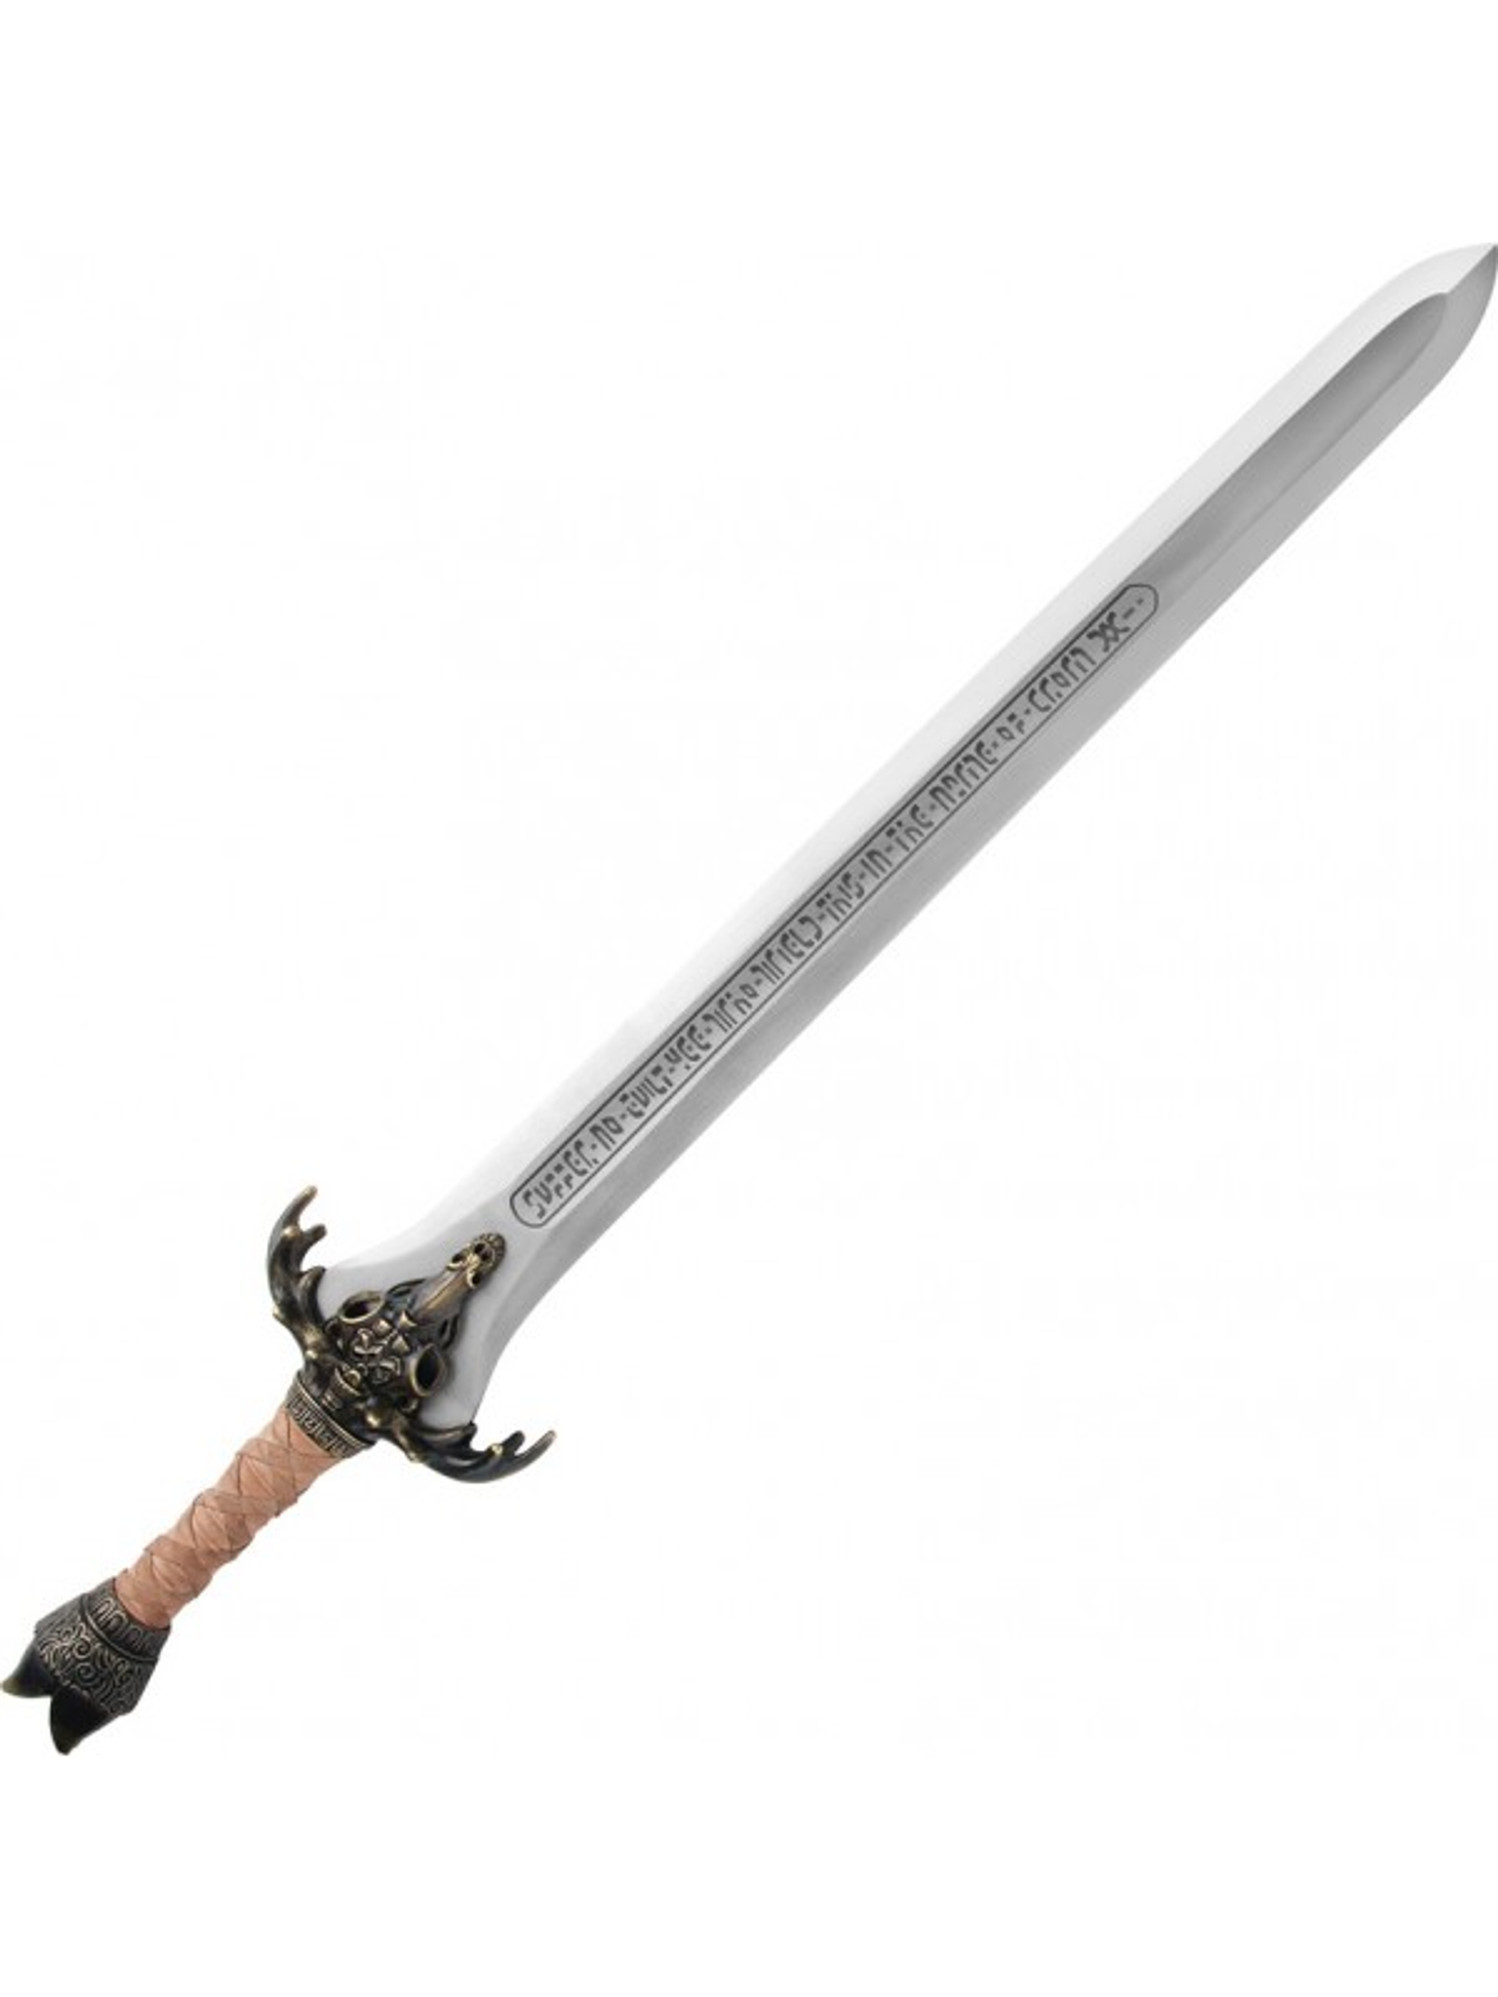 Museum Replicas The Fathers Sword - Conan The Barbarian